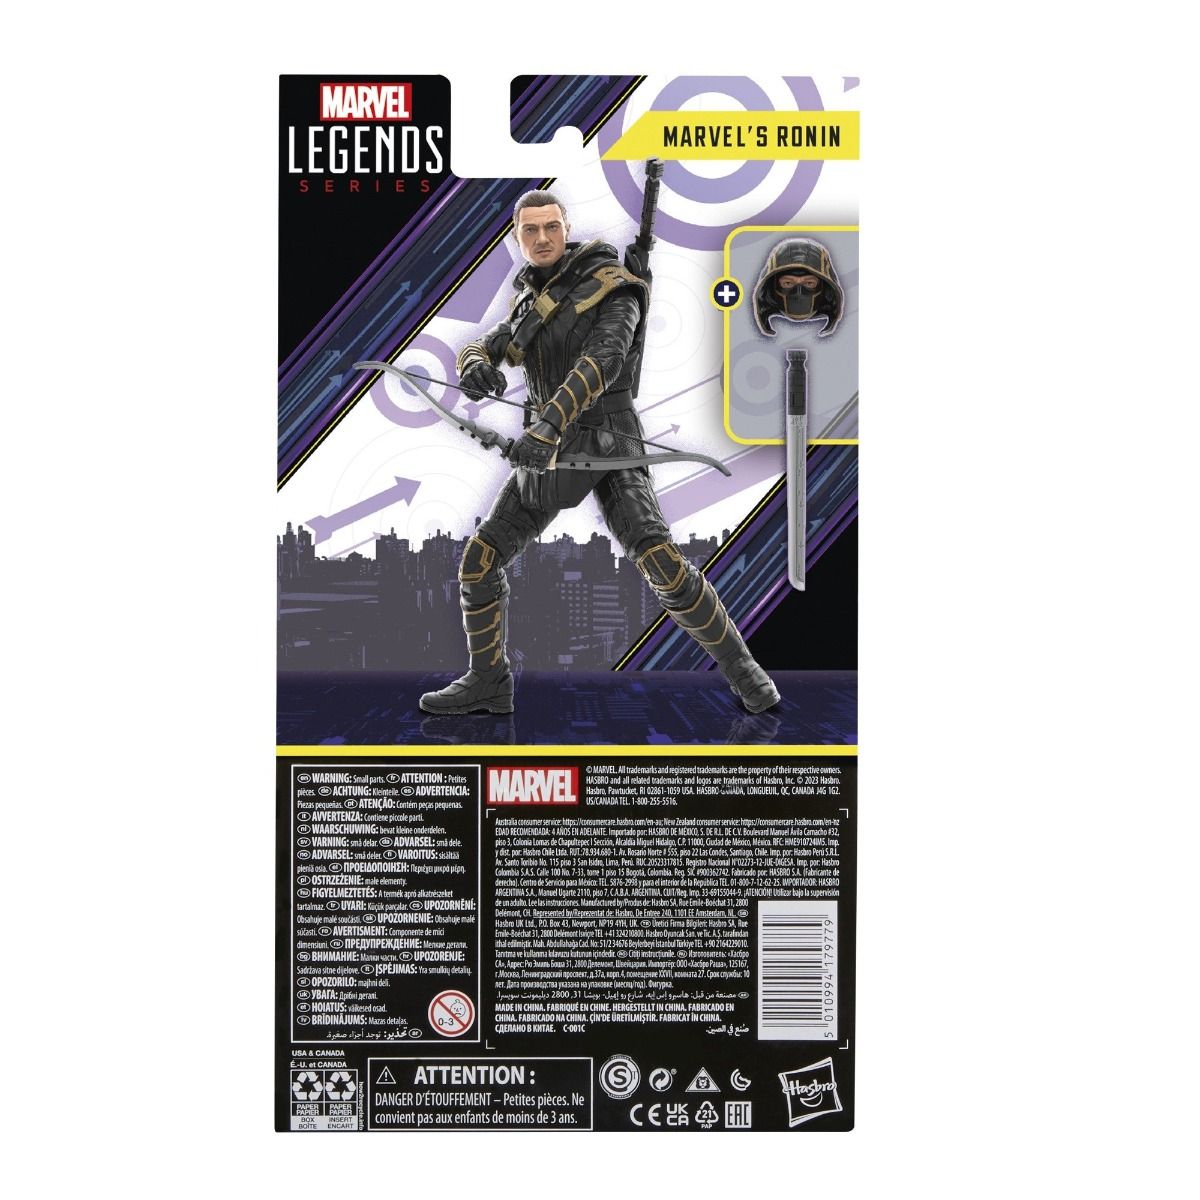 Marvel Legends Hawkeye Marvel's Ronin 6-Inch Action Figure 正規品画像